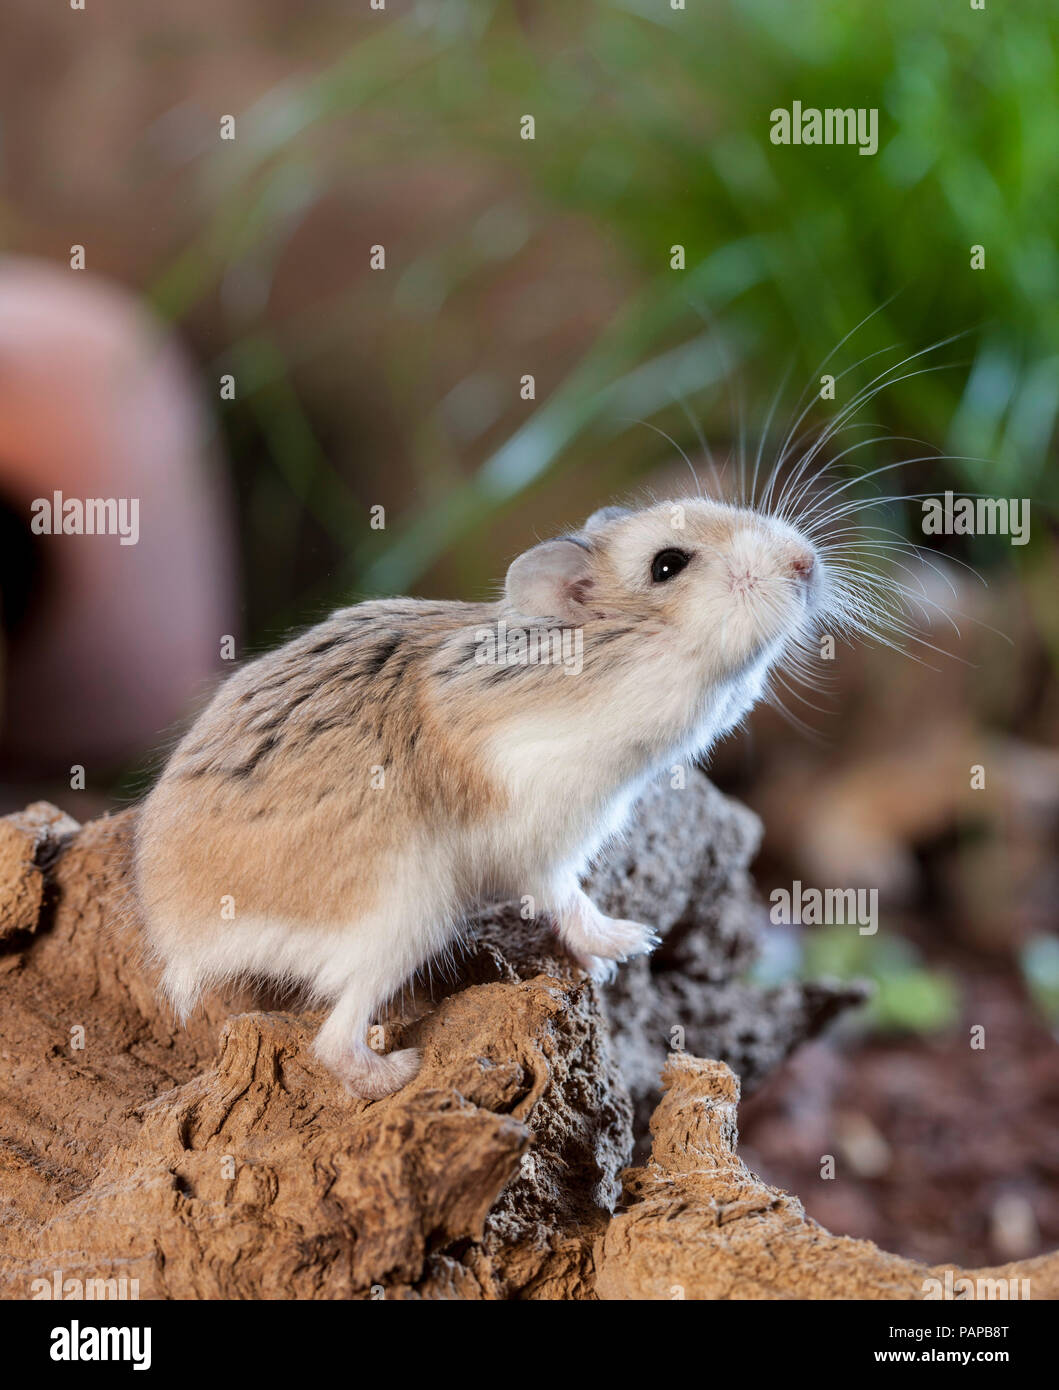 Roborovski Hamster (Phodopus roborovskii). Adult on a root, testing the air. Germany Stock Photo